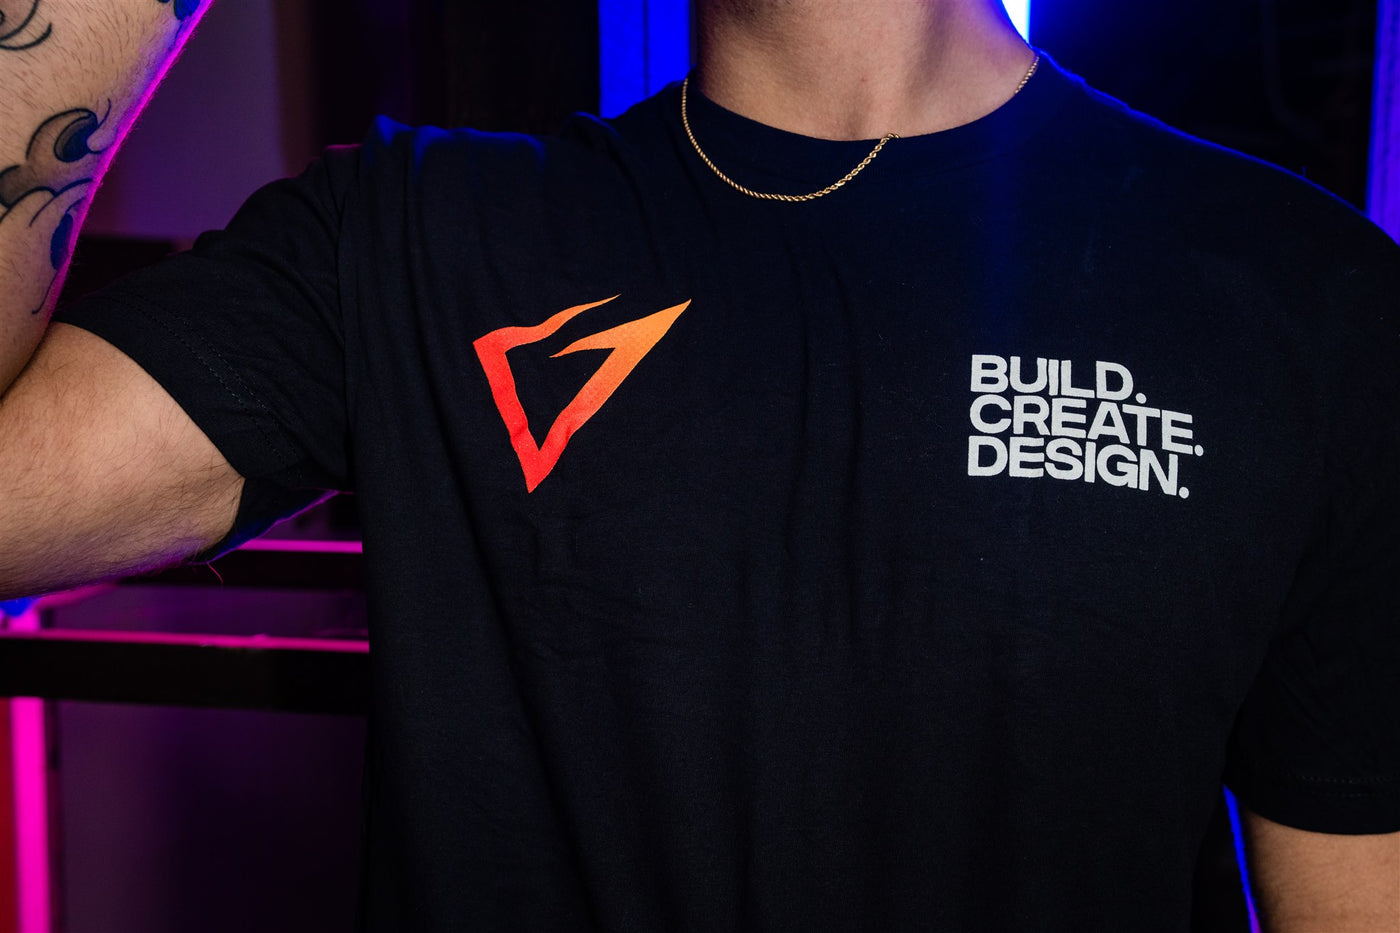 Build.Create.Design T-Shirt Vyral